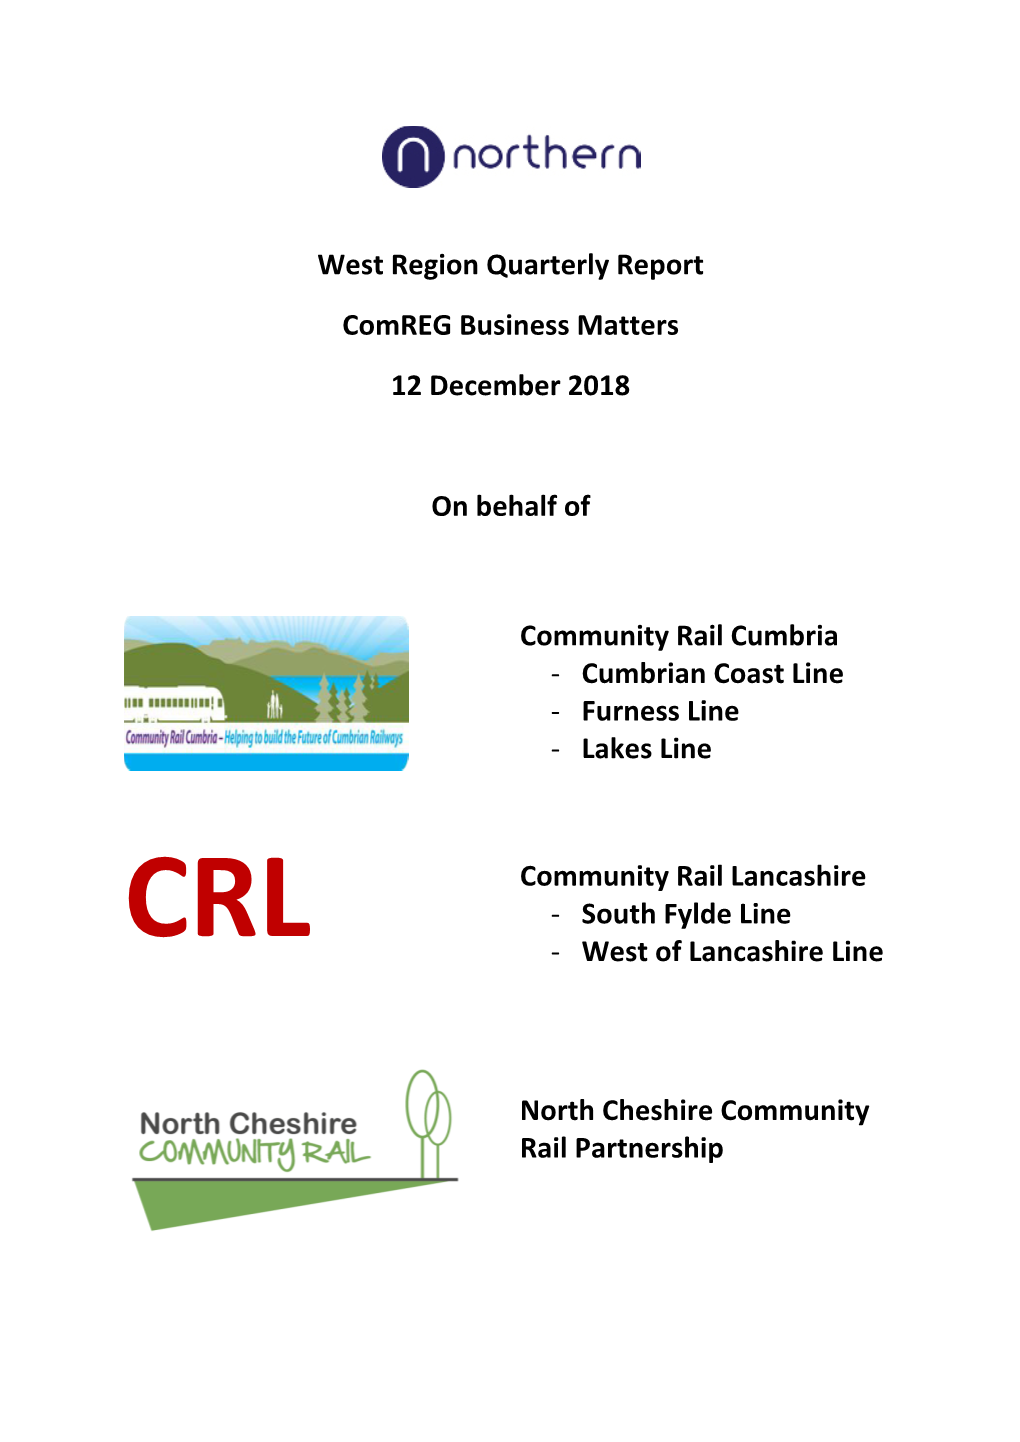 West Region Quarterly Report Comreg Business Matters 12 December 2018